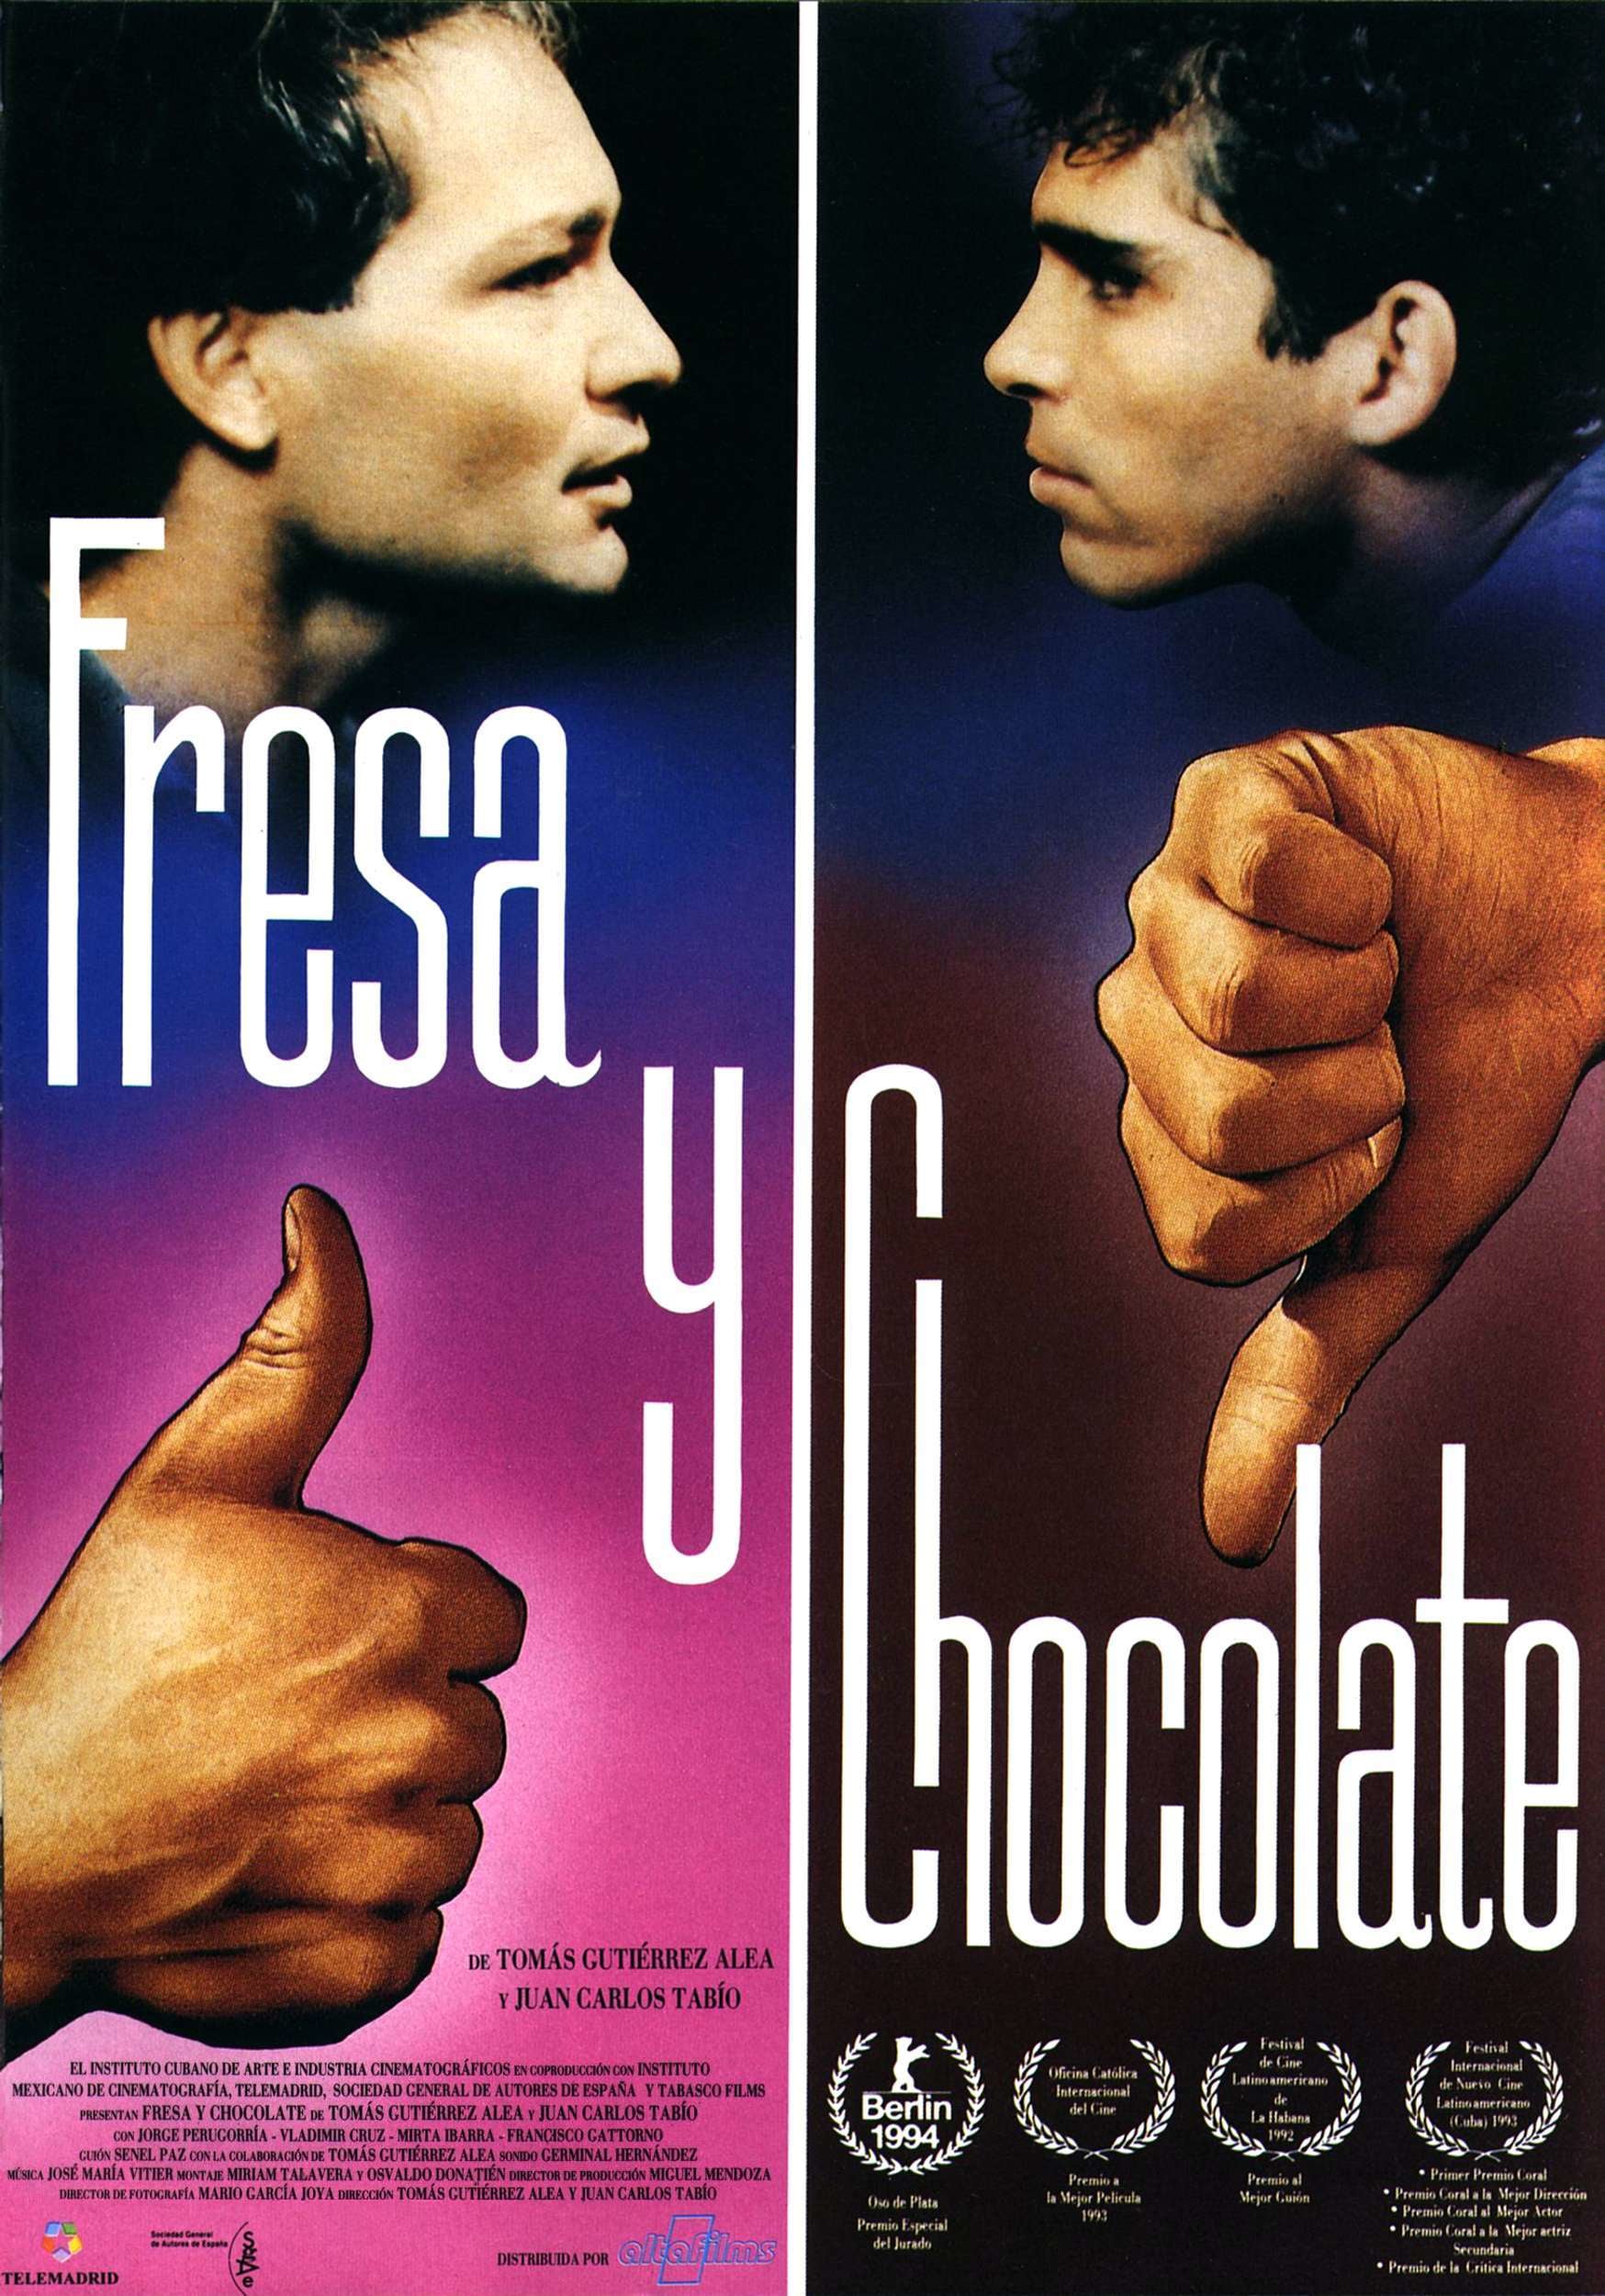 Fraise et Chocolat